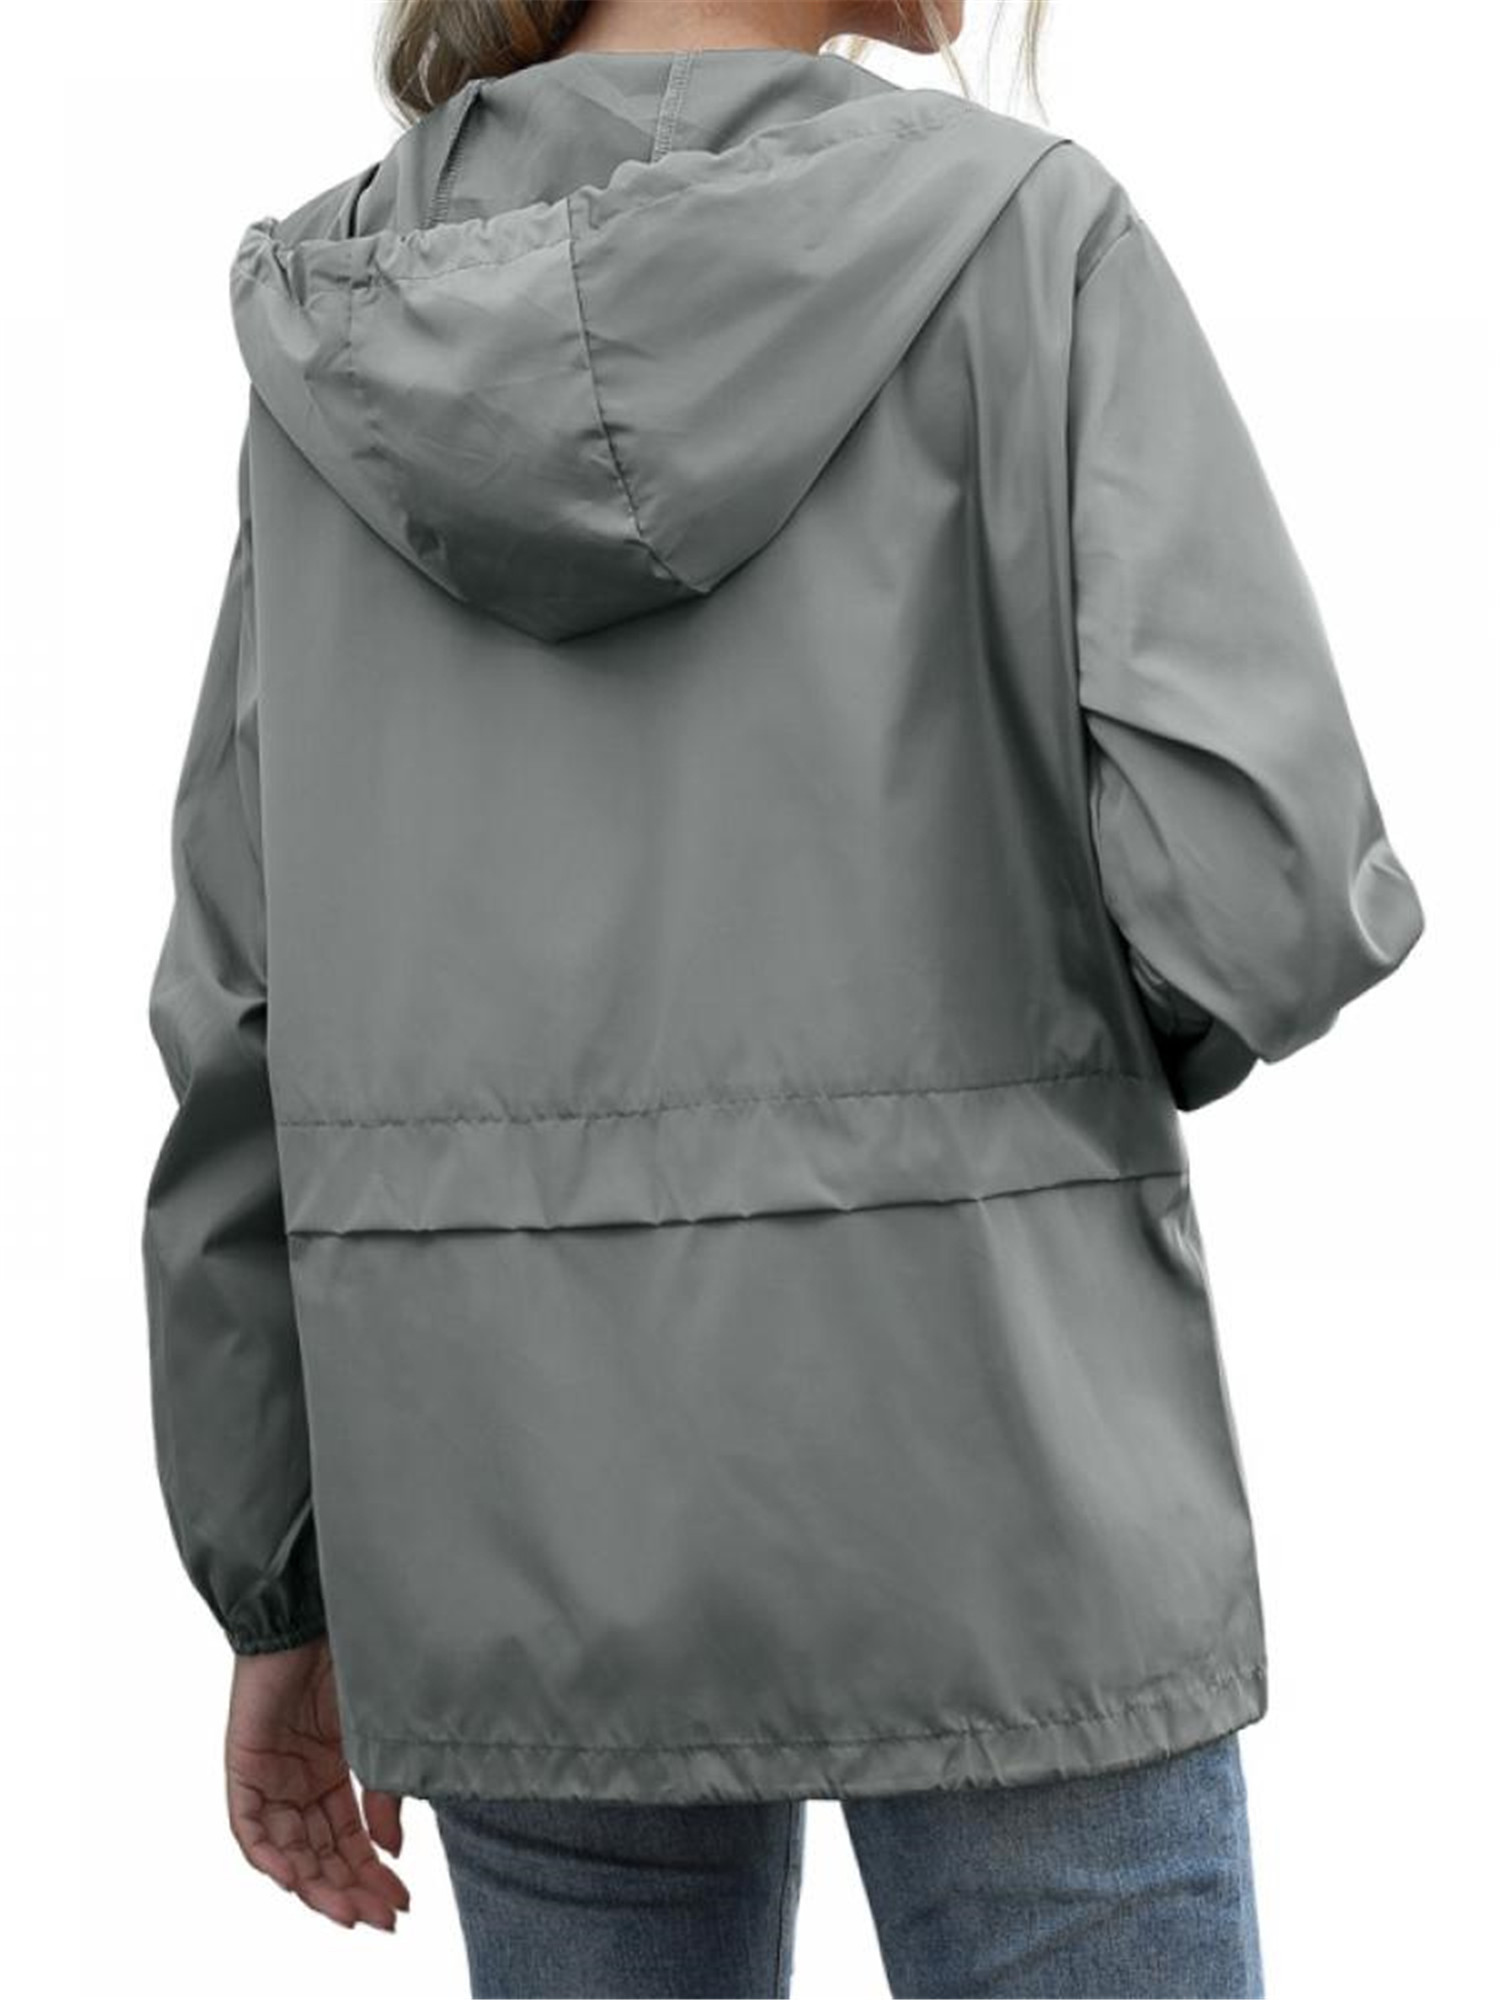 Topwoner Women's Raincoat Lightweight Rain Jacket Hooded Windbreaker Pockets for Outdoor - image 2 of 8